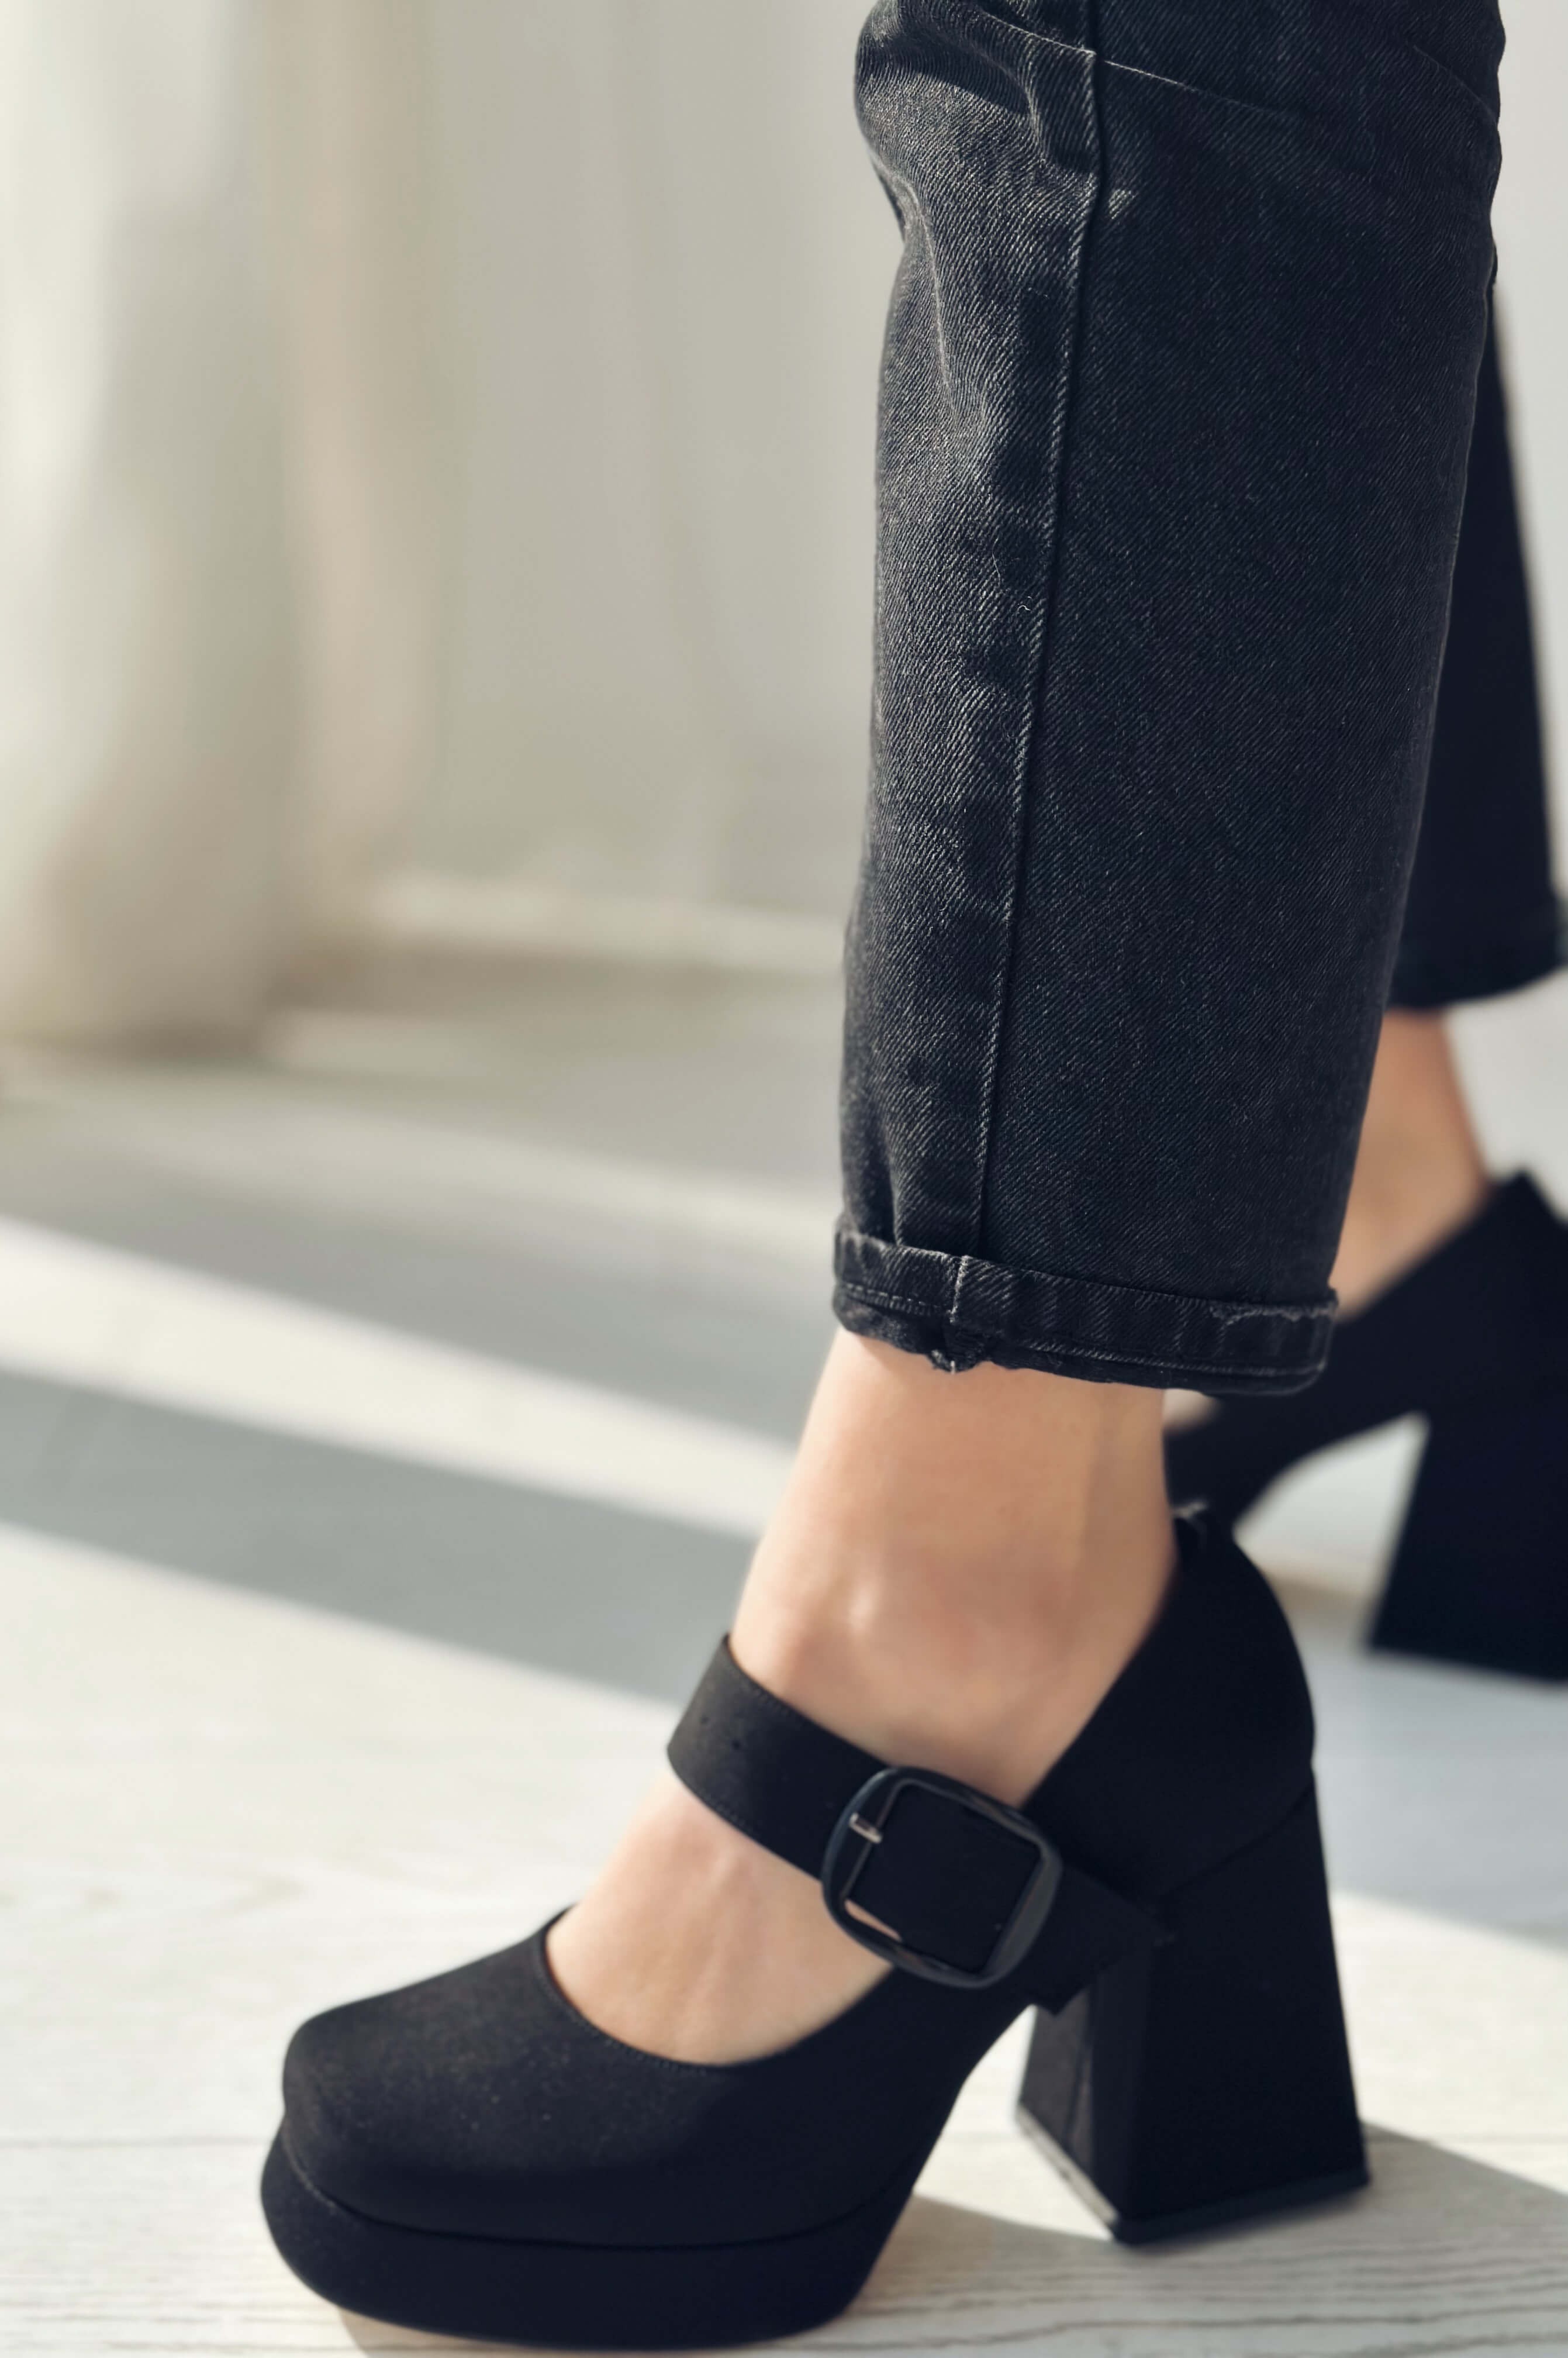 Alpons Satin Women's Platform Heels Shoes Black